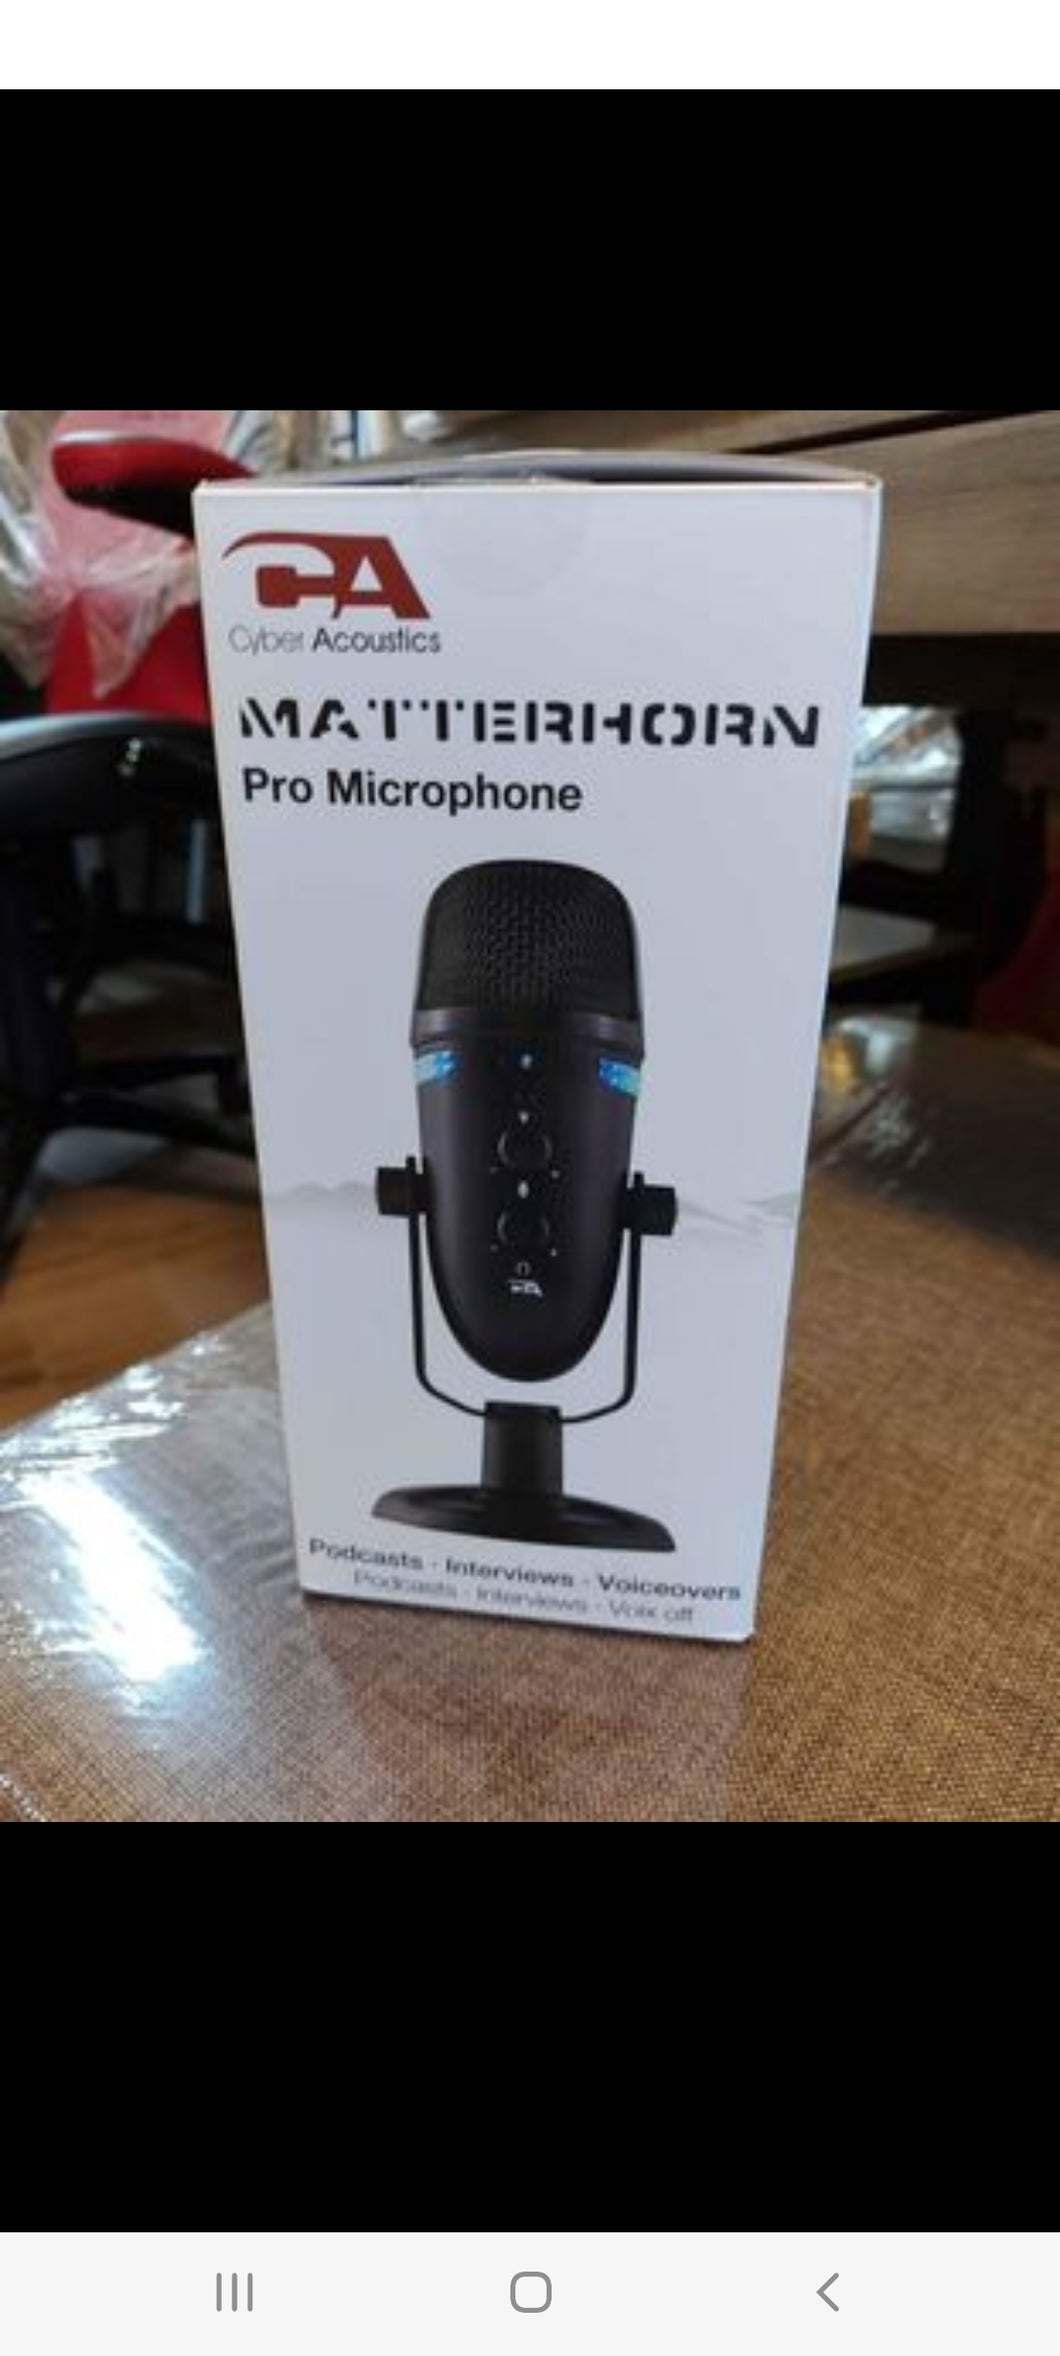 CVL-2230 Matterhorn USB Professional Recording Mic with Color